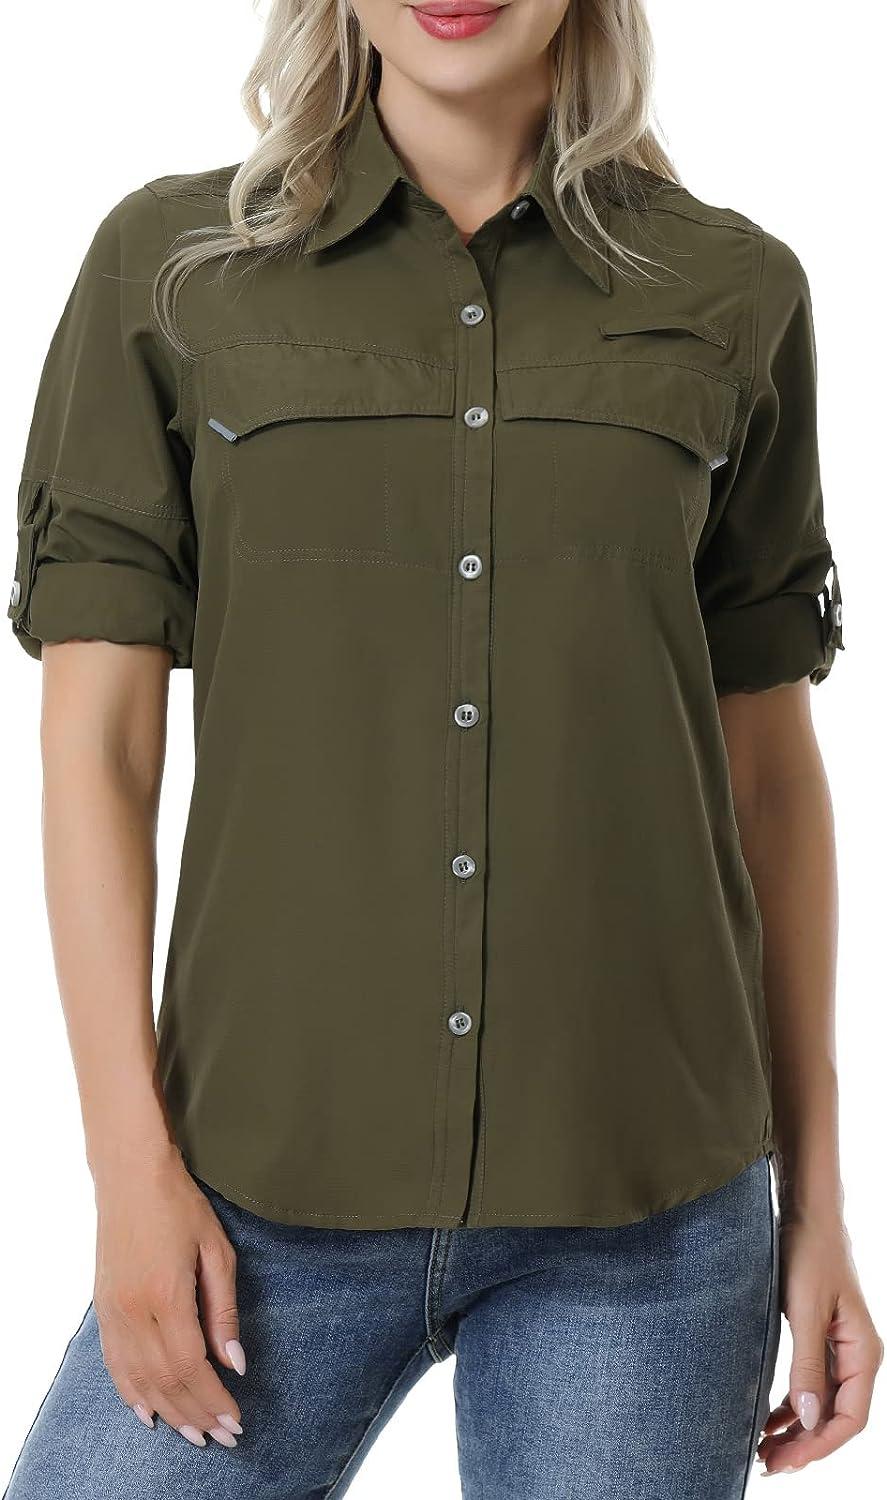 Women's UV Sun Protection Fishing Shirts Long Sleeve Hiking Safari Shirts  Army Green Small